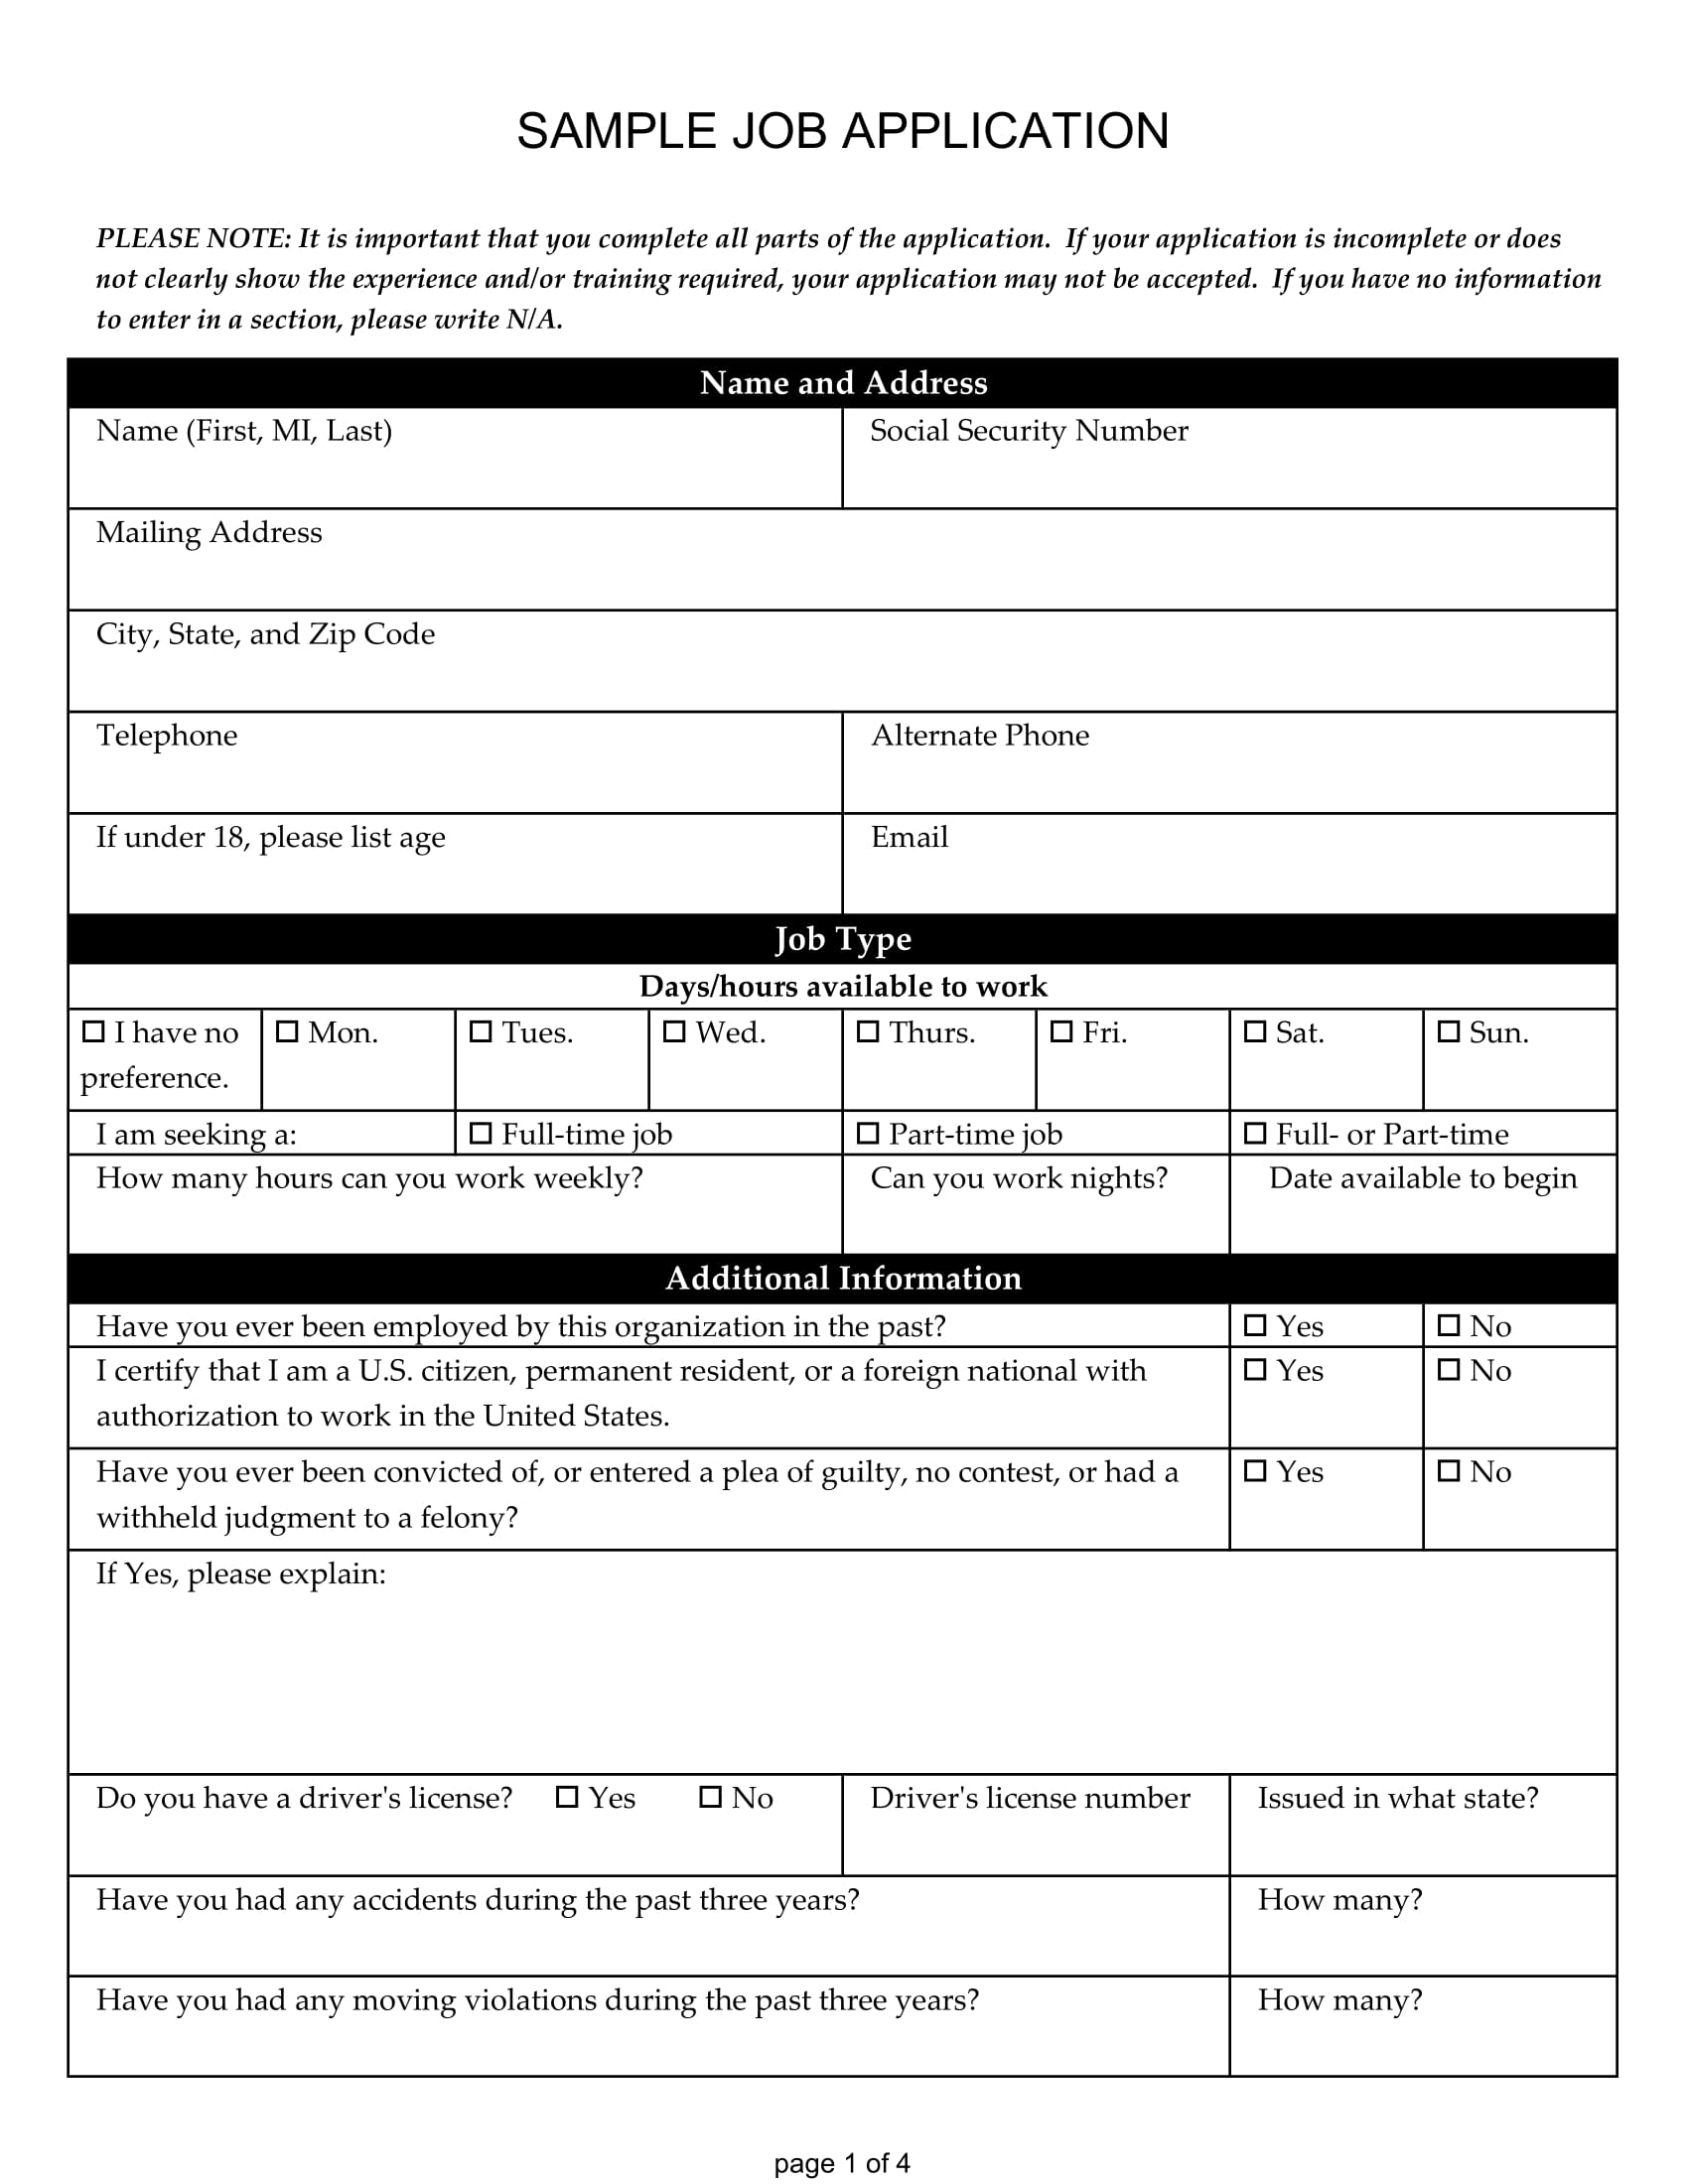 lengthy job application form example